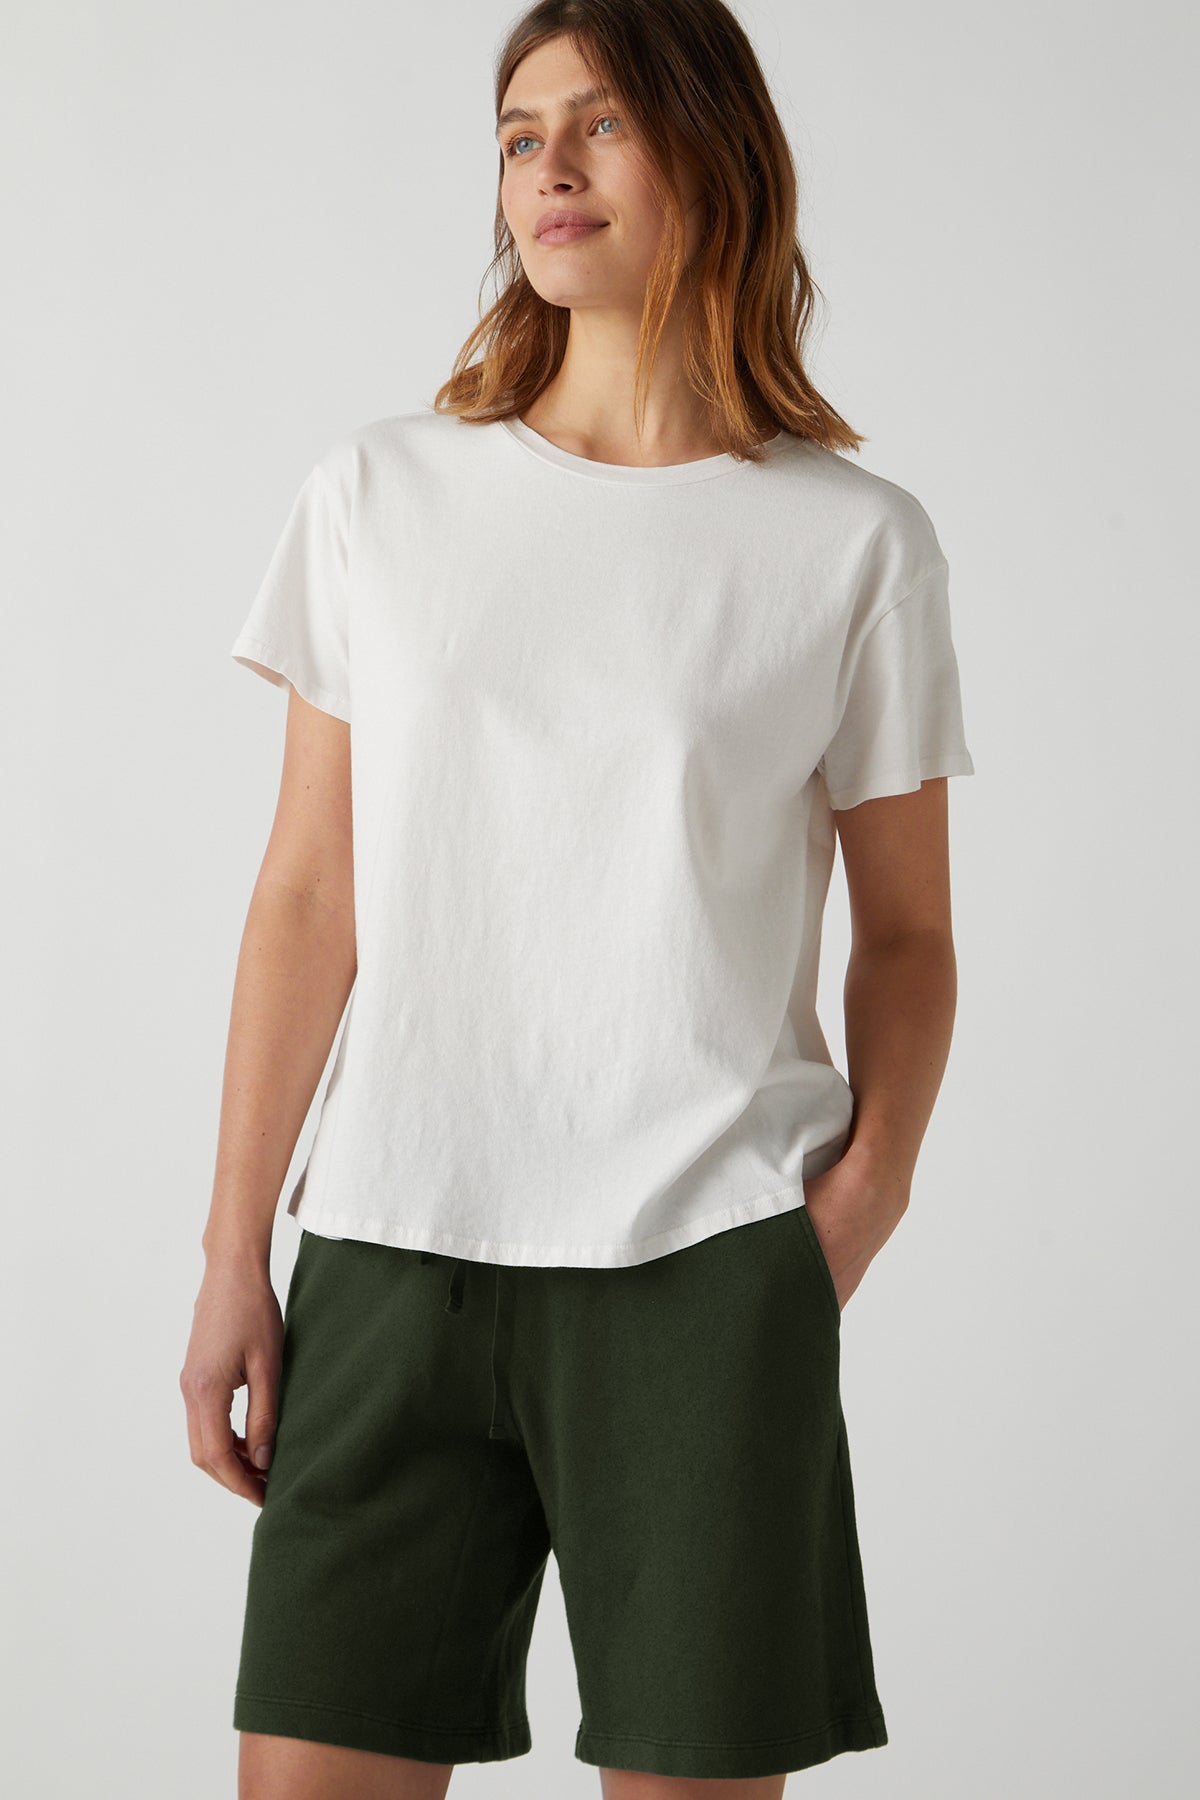   a woman wearing a white t-shirt and Velvet by Jenny Graham's LAGUNA SWEATSHORT. 